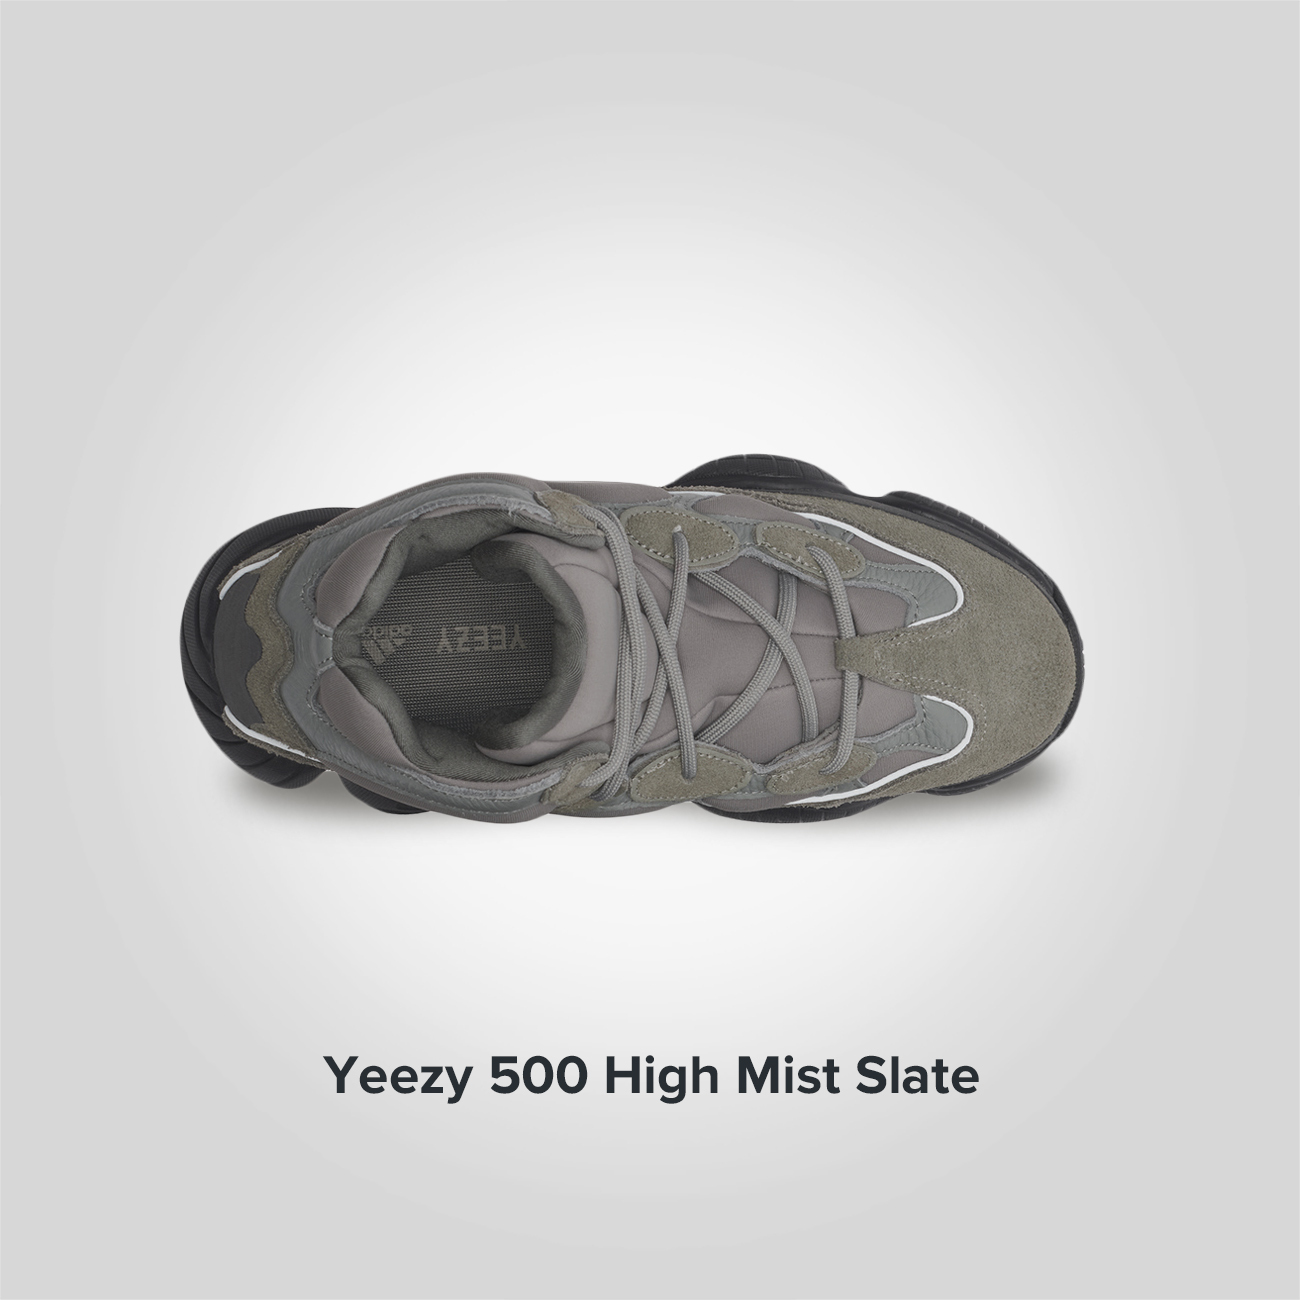 Yeezy 500 High Mist Slate